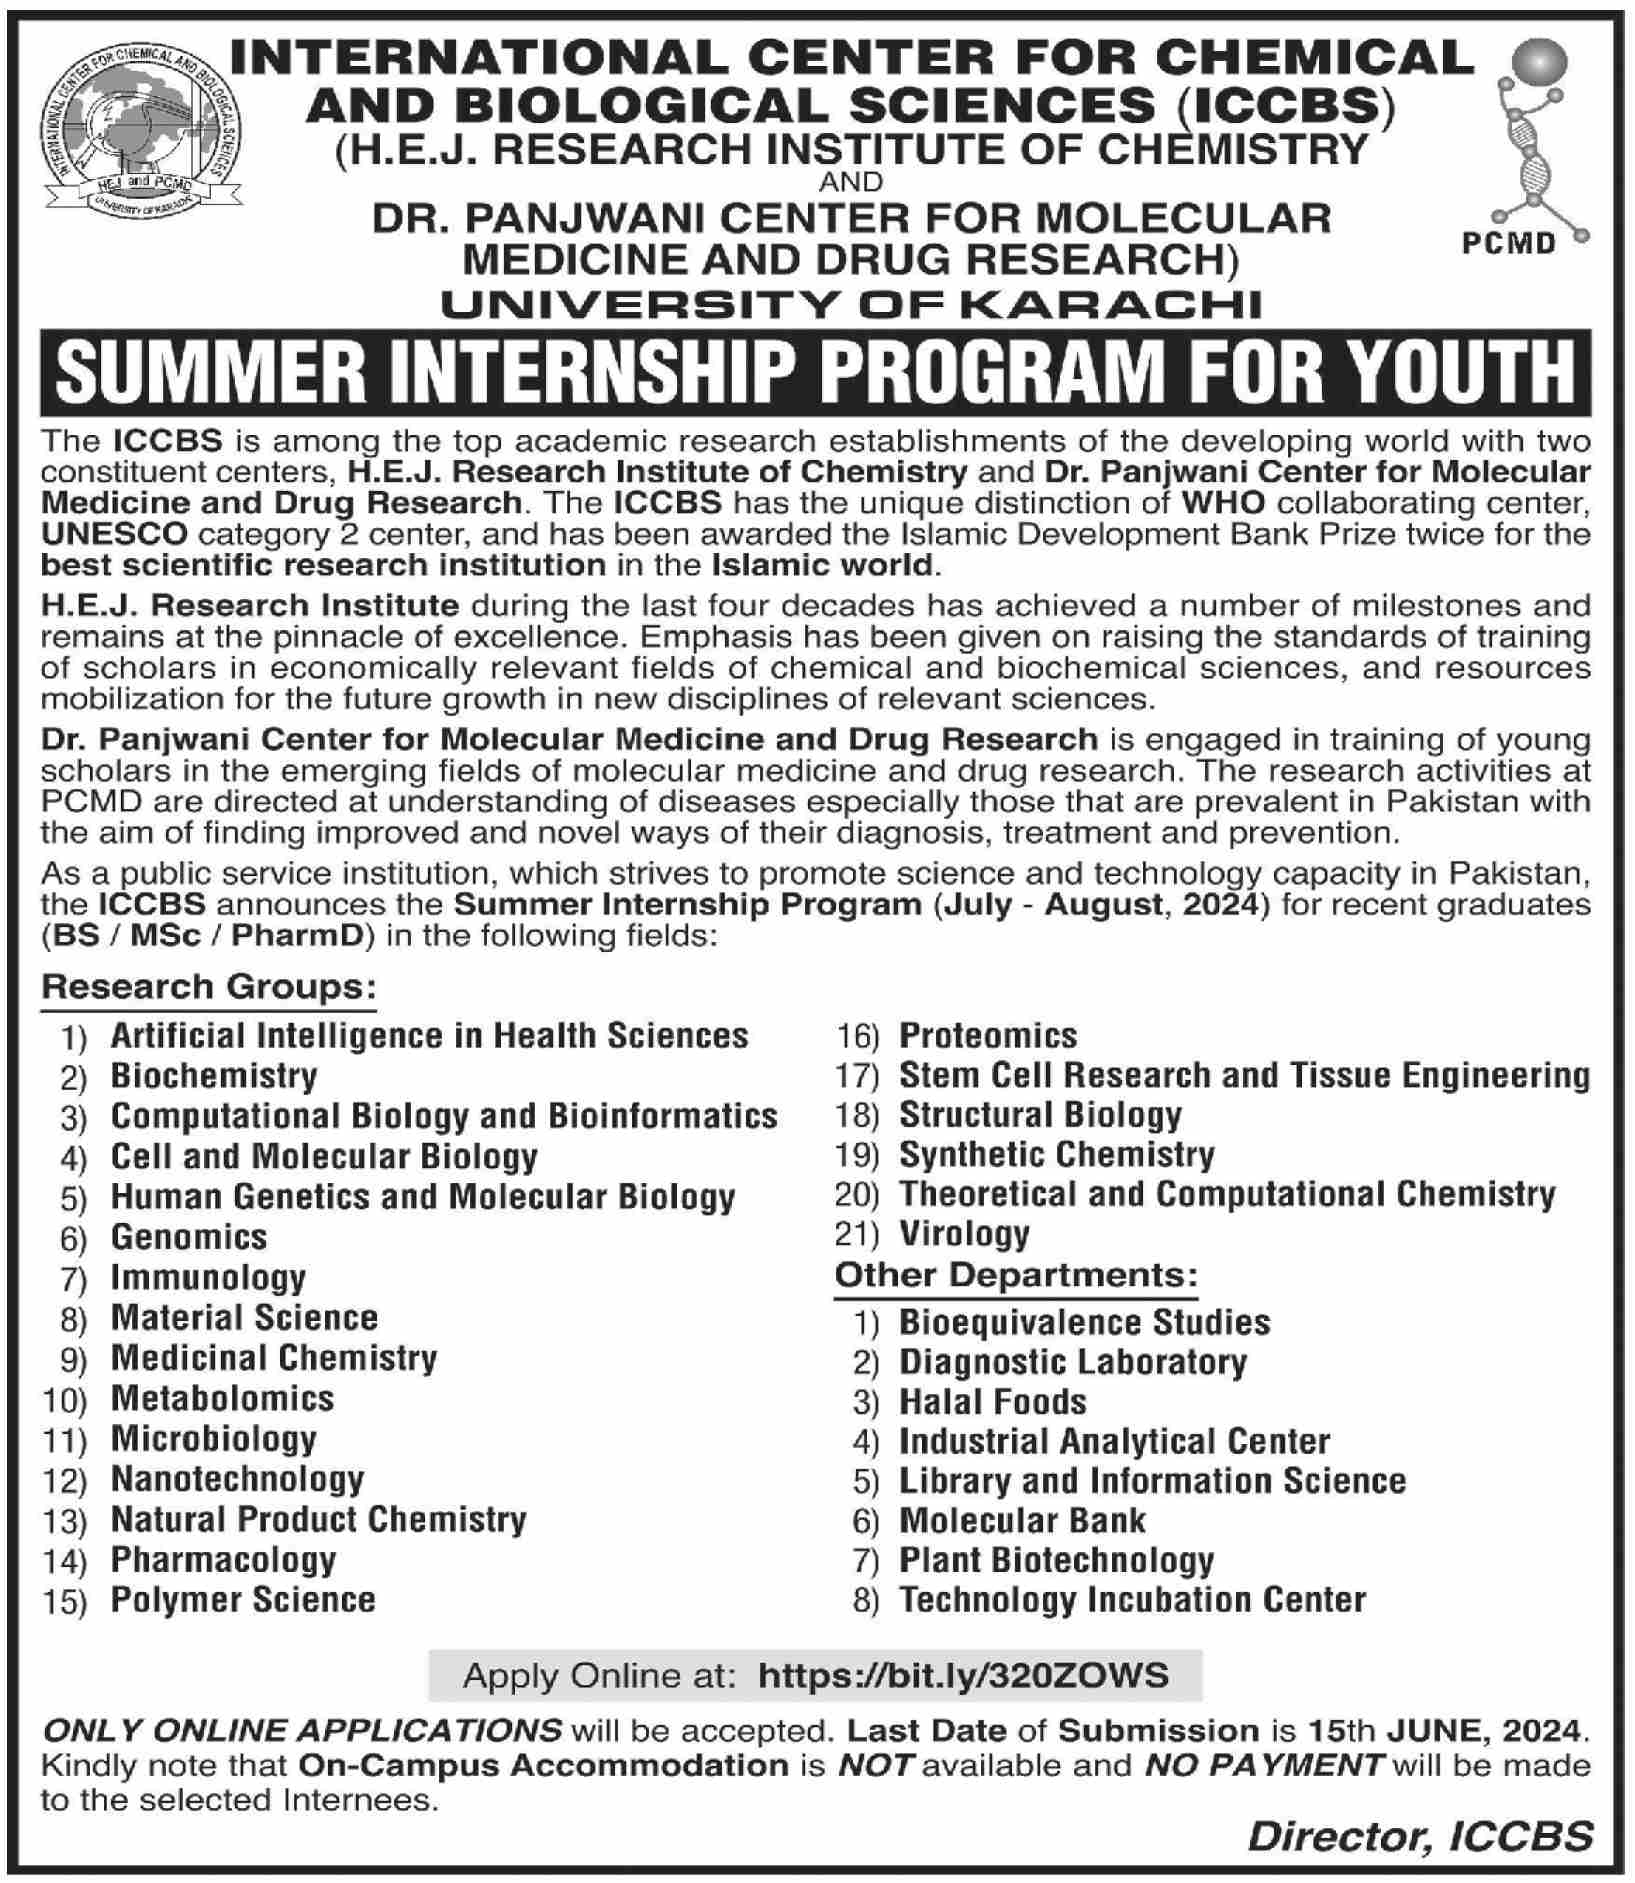 Summer Internship Program for Youth (July-August 2024)